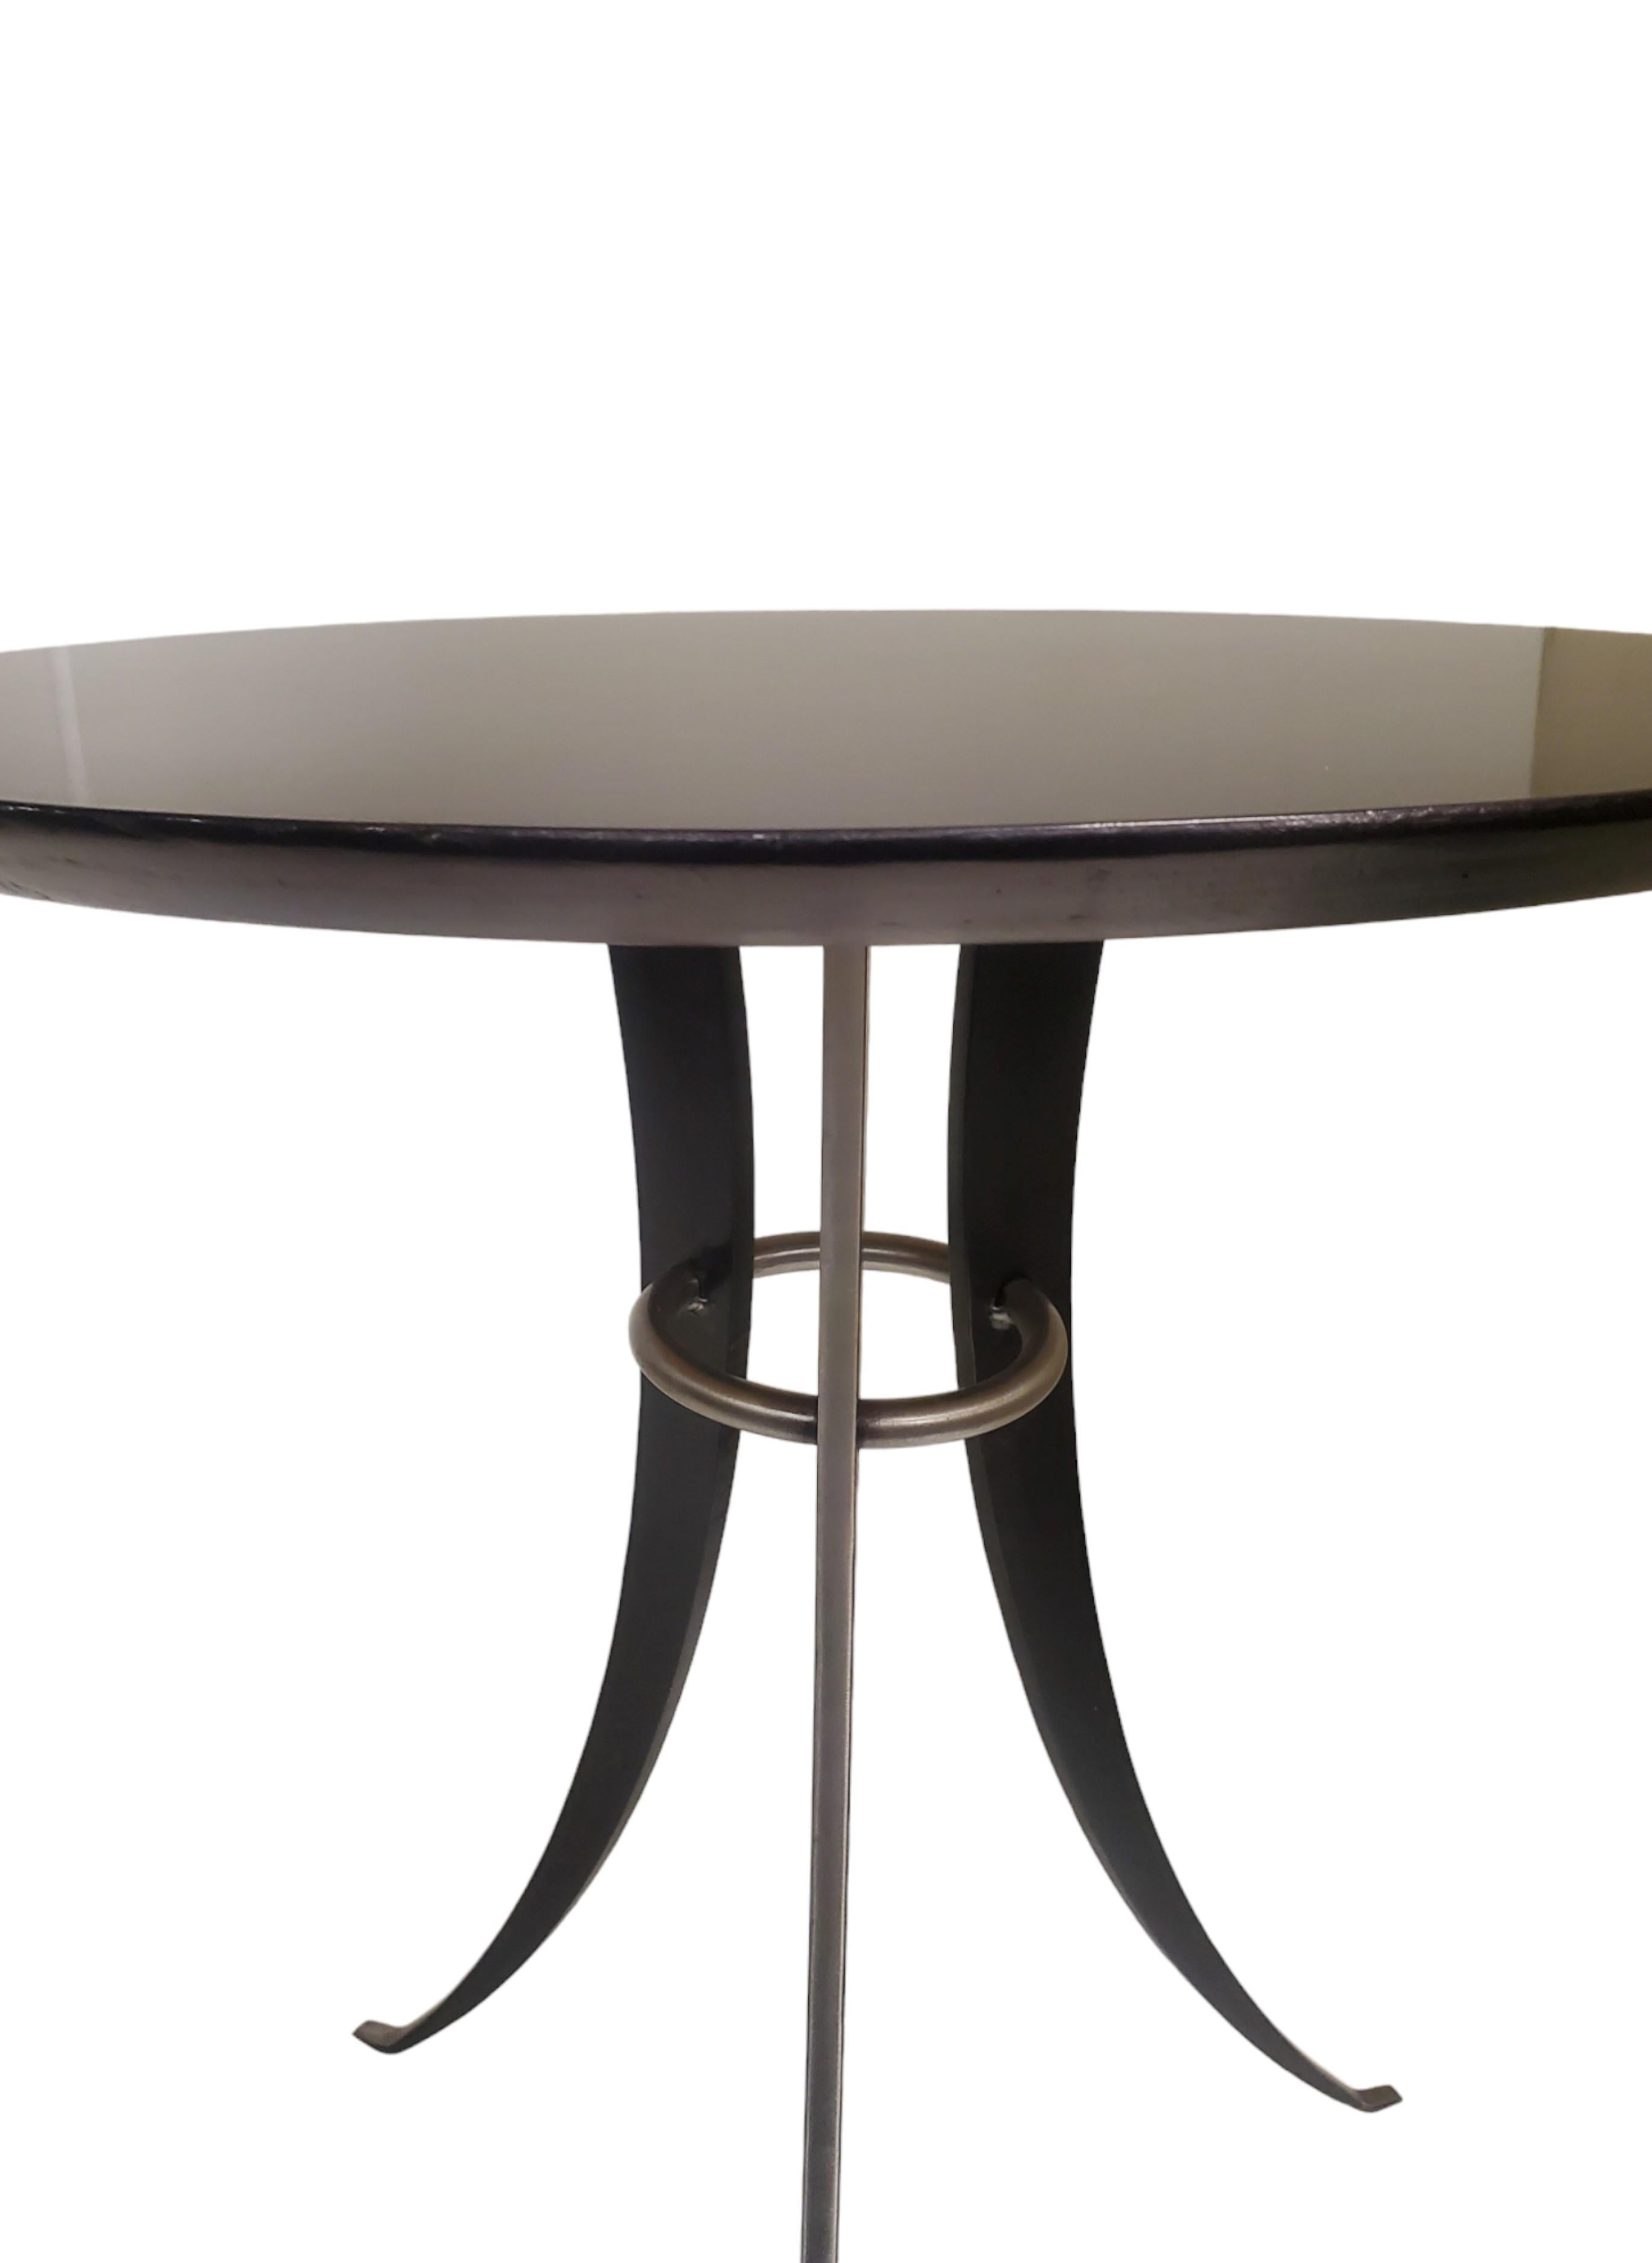 Minimalist Steel and Ebonized Wood Circular Table w/ tripodal legged base  For Sale 7